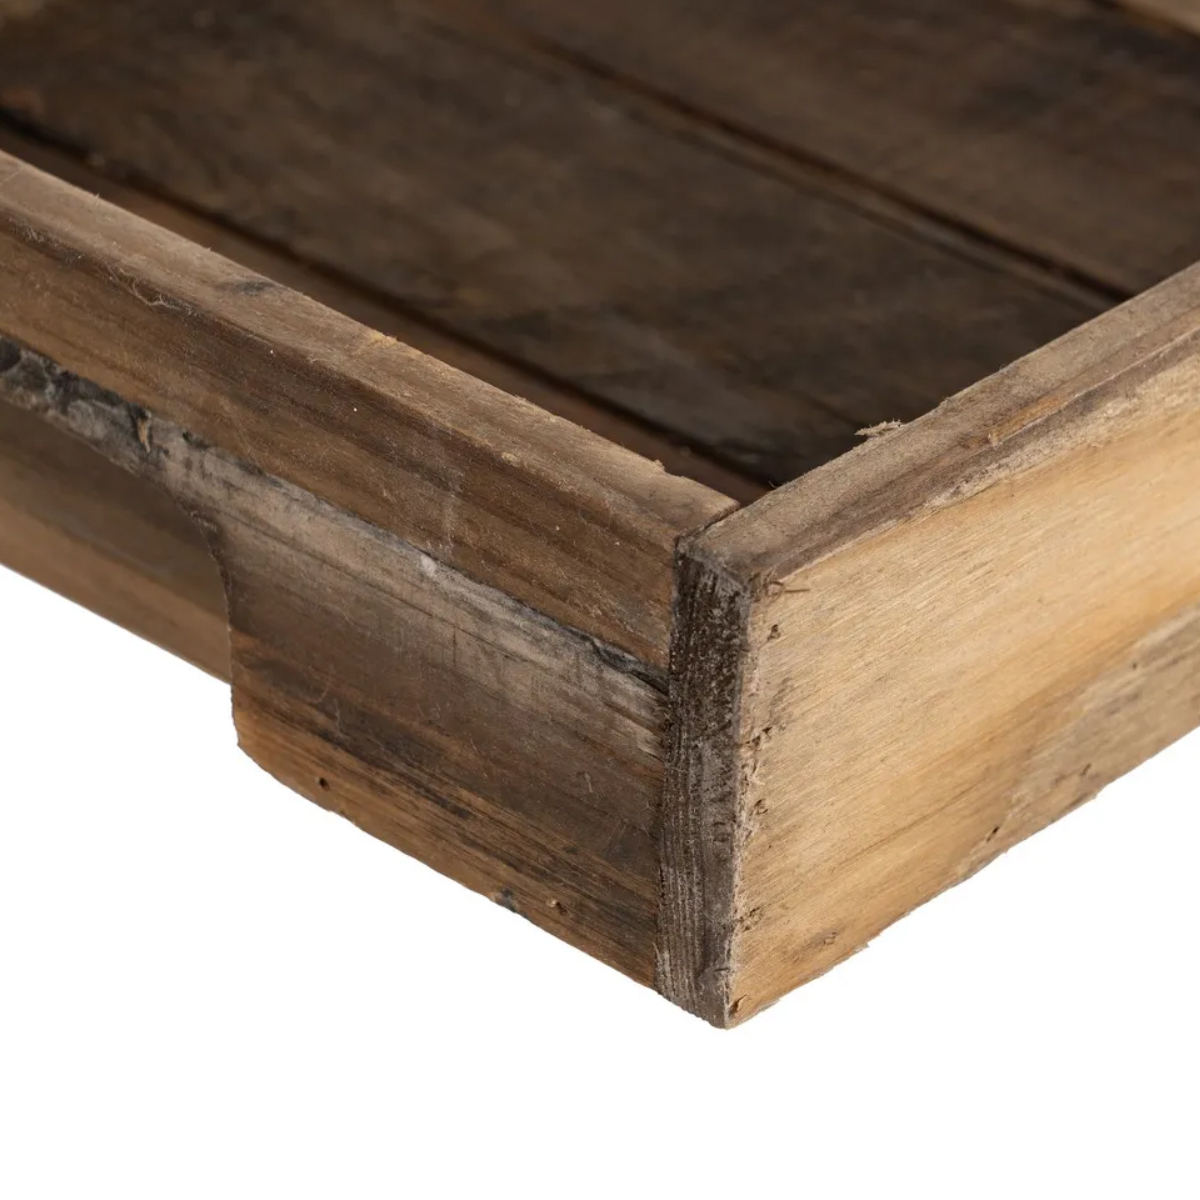 Set of 3 raw wood trays